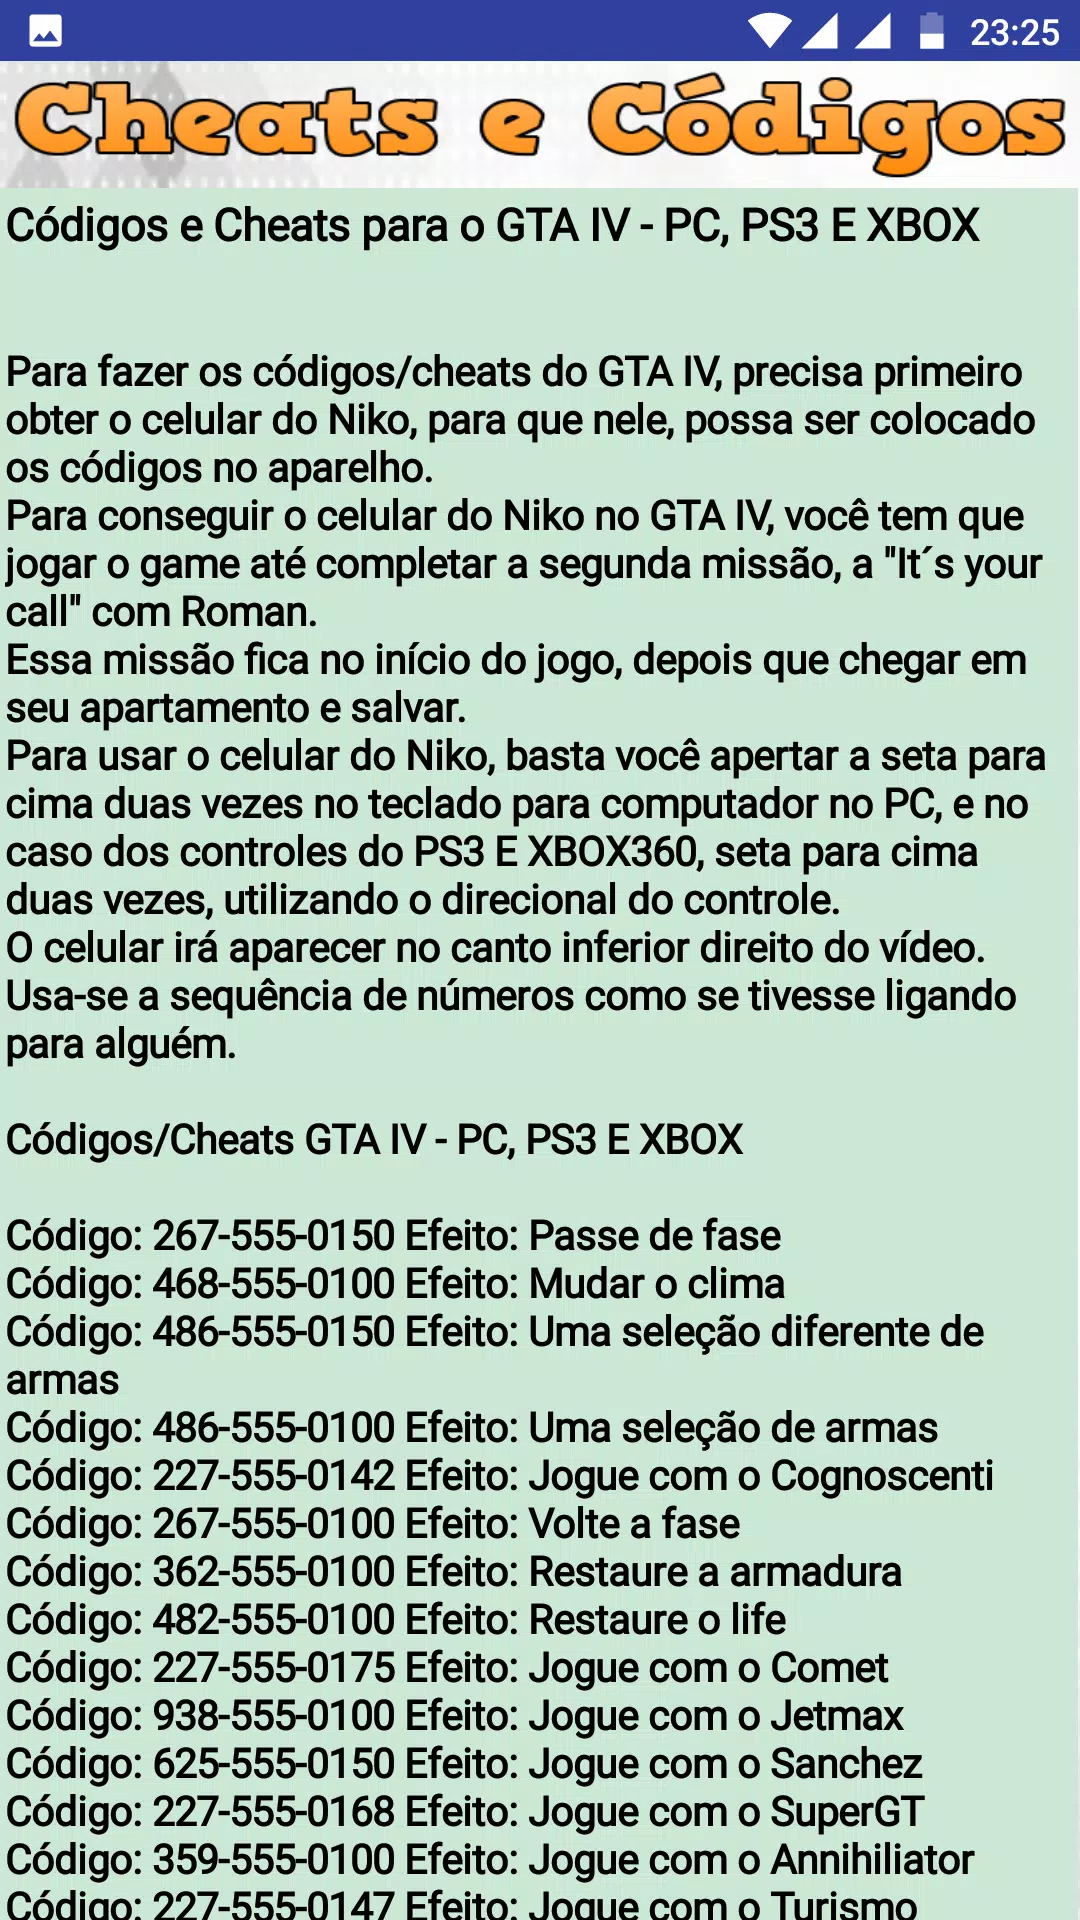 CÓDIGOS GTA IV PARA PS3 